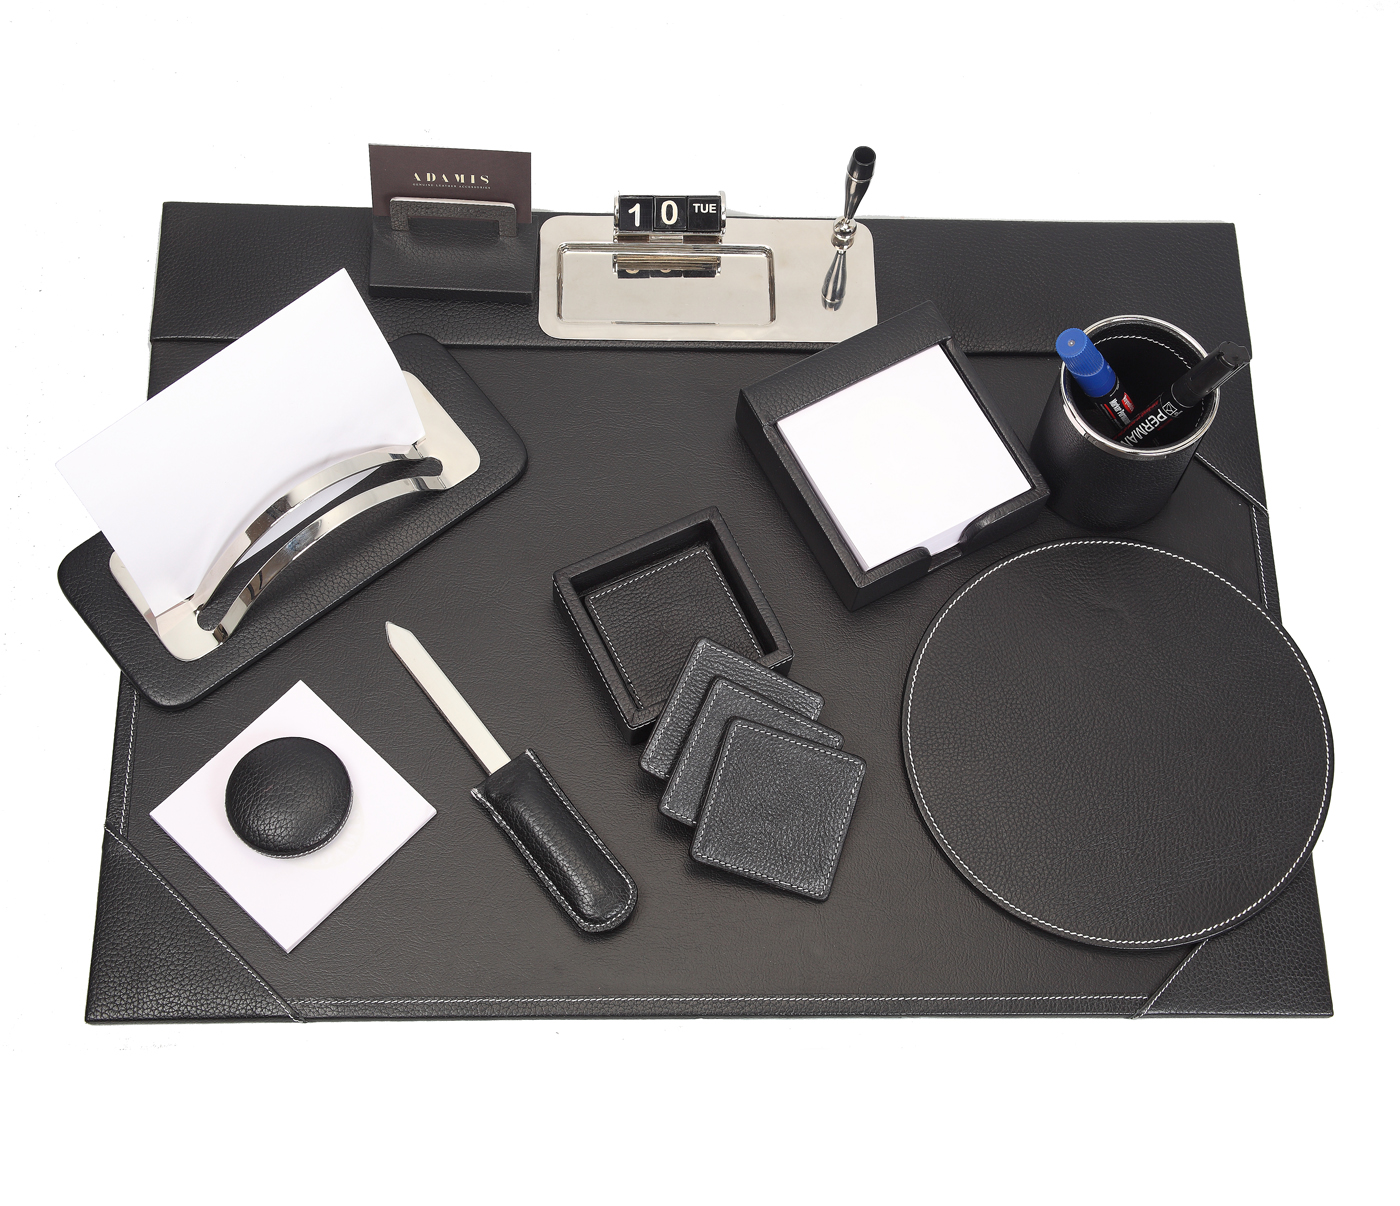 DSK1--8pcs office desk set organizer in Genuine Leather - Black